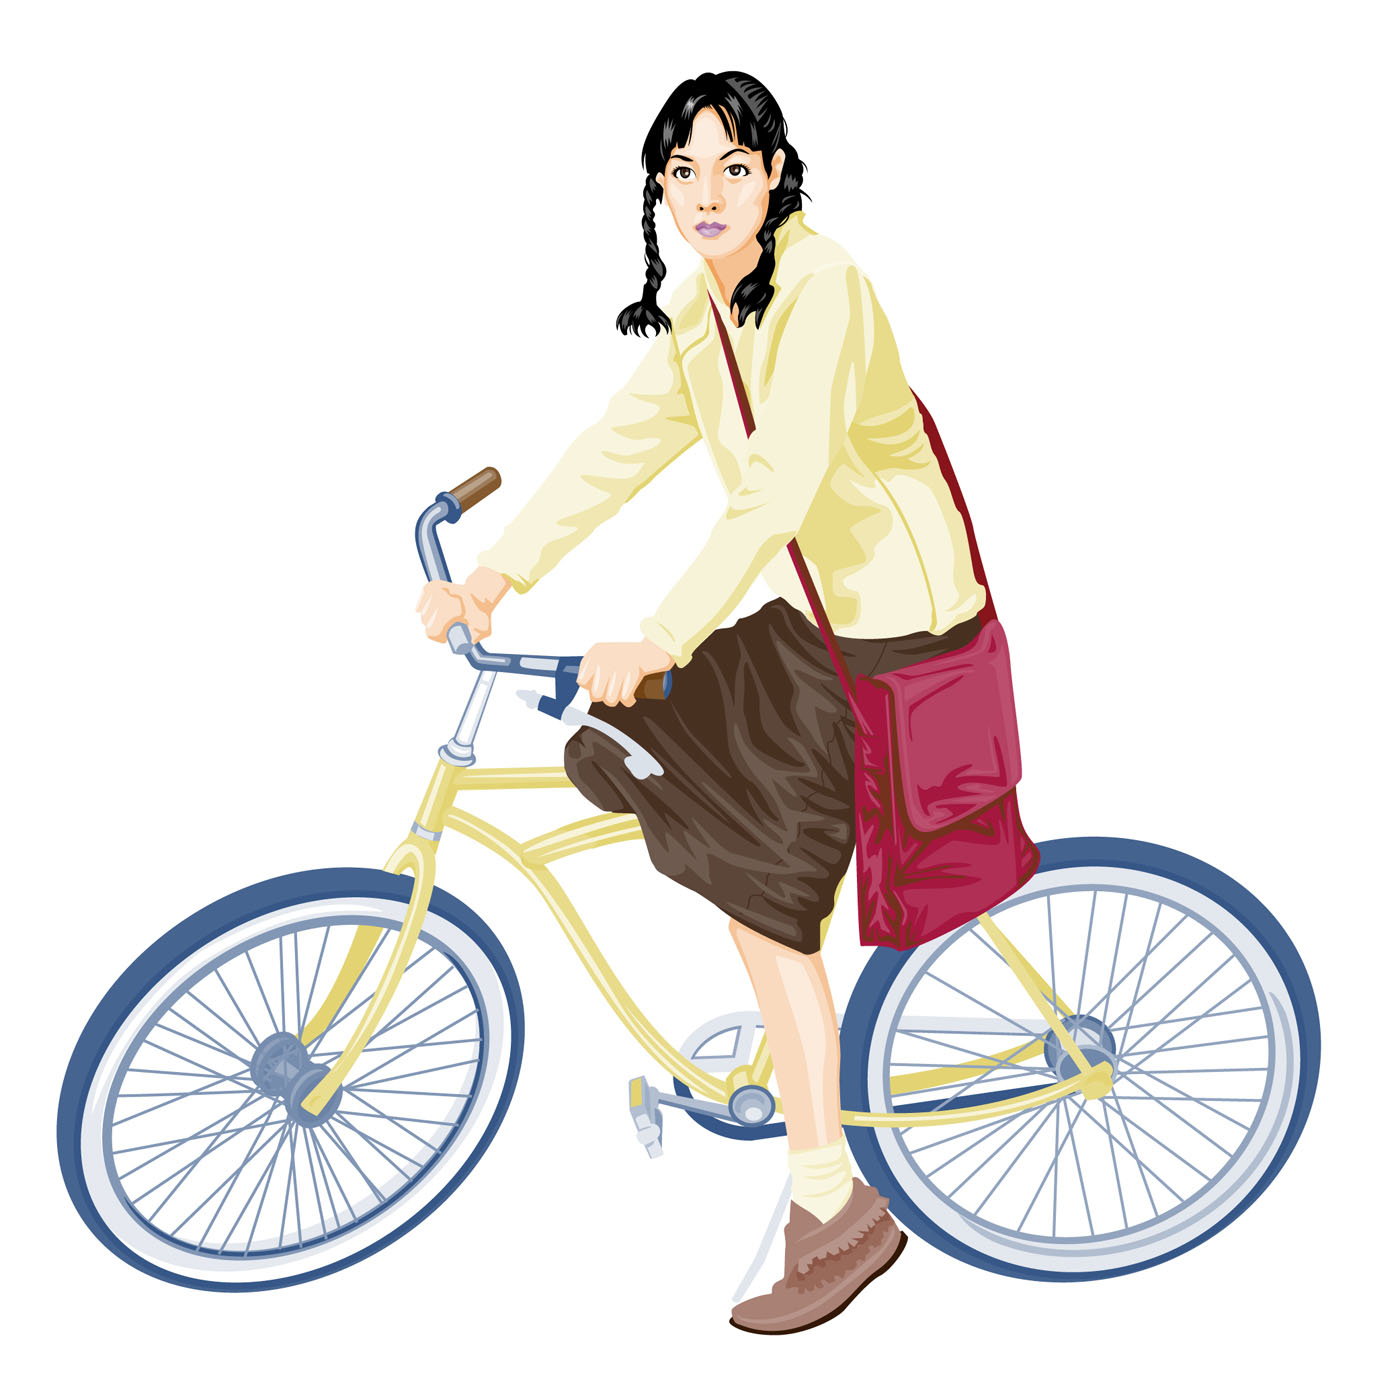 http://3.bp.blogspot.com/-m2-kxv_7at8/Td0HKMEfRgI/AAAAAAAAK2Y/g7MCDuxjOqQ/s1600/Women_Ride_a_Bicycle-01.jpg